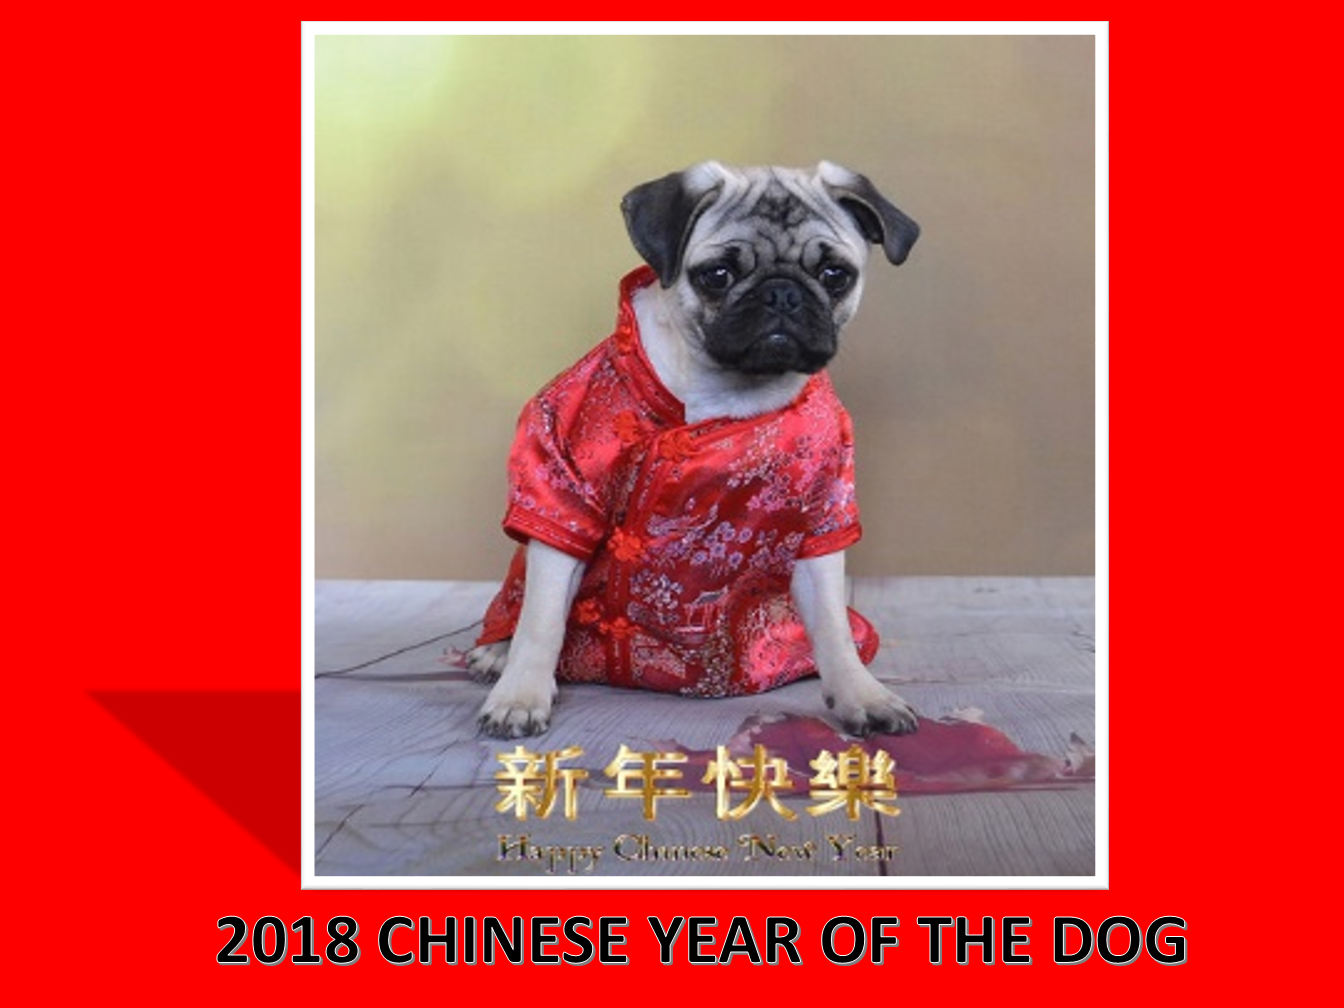 chinese new year dog presentation plantilla imagen principal